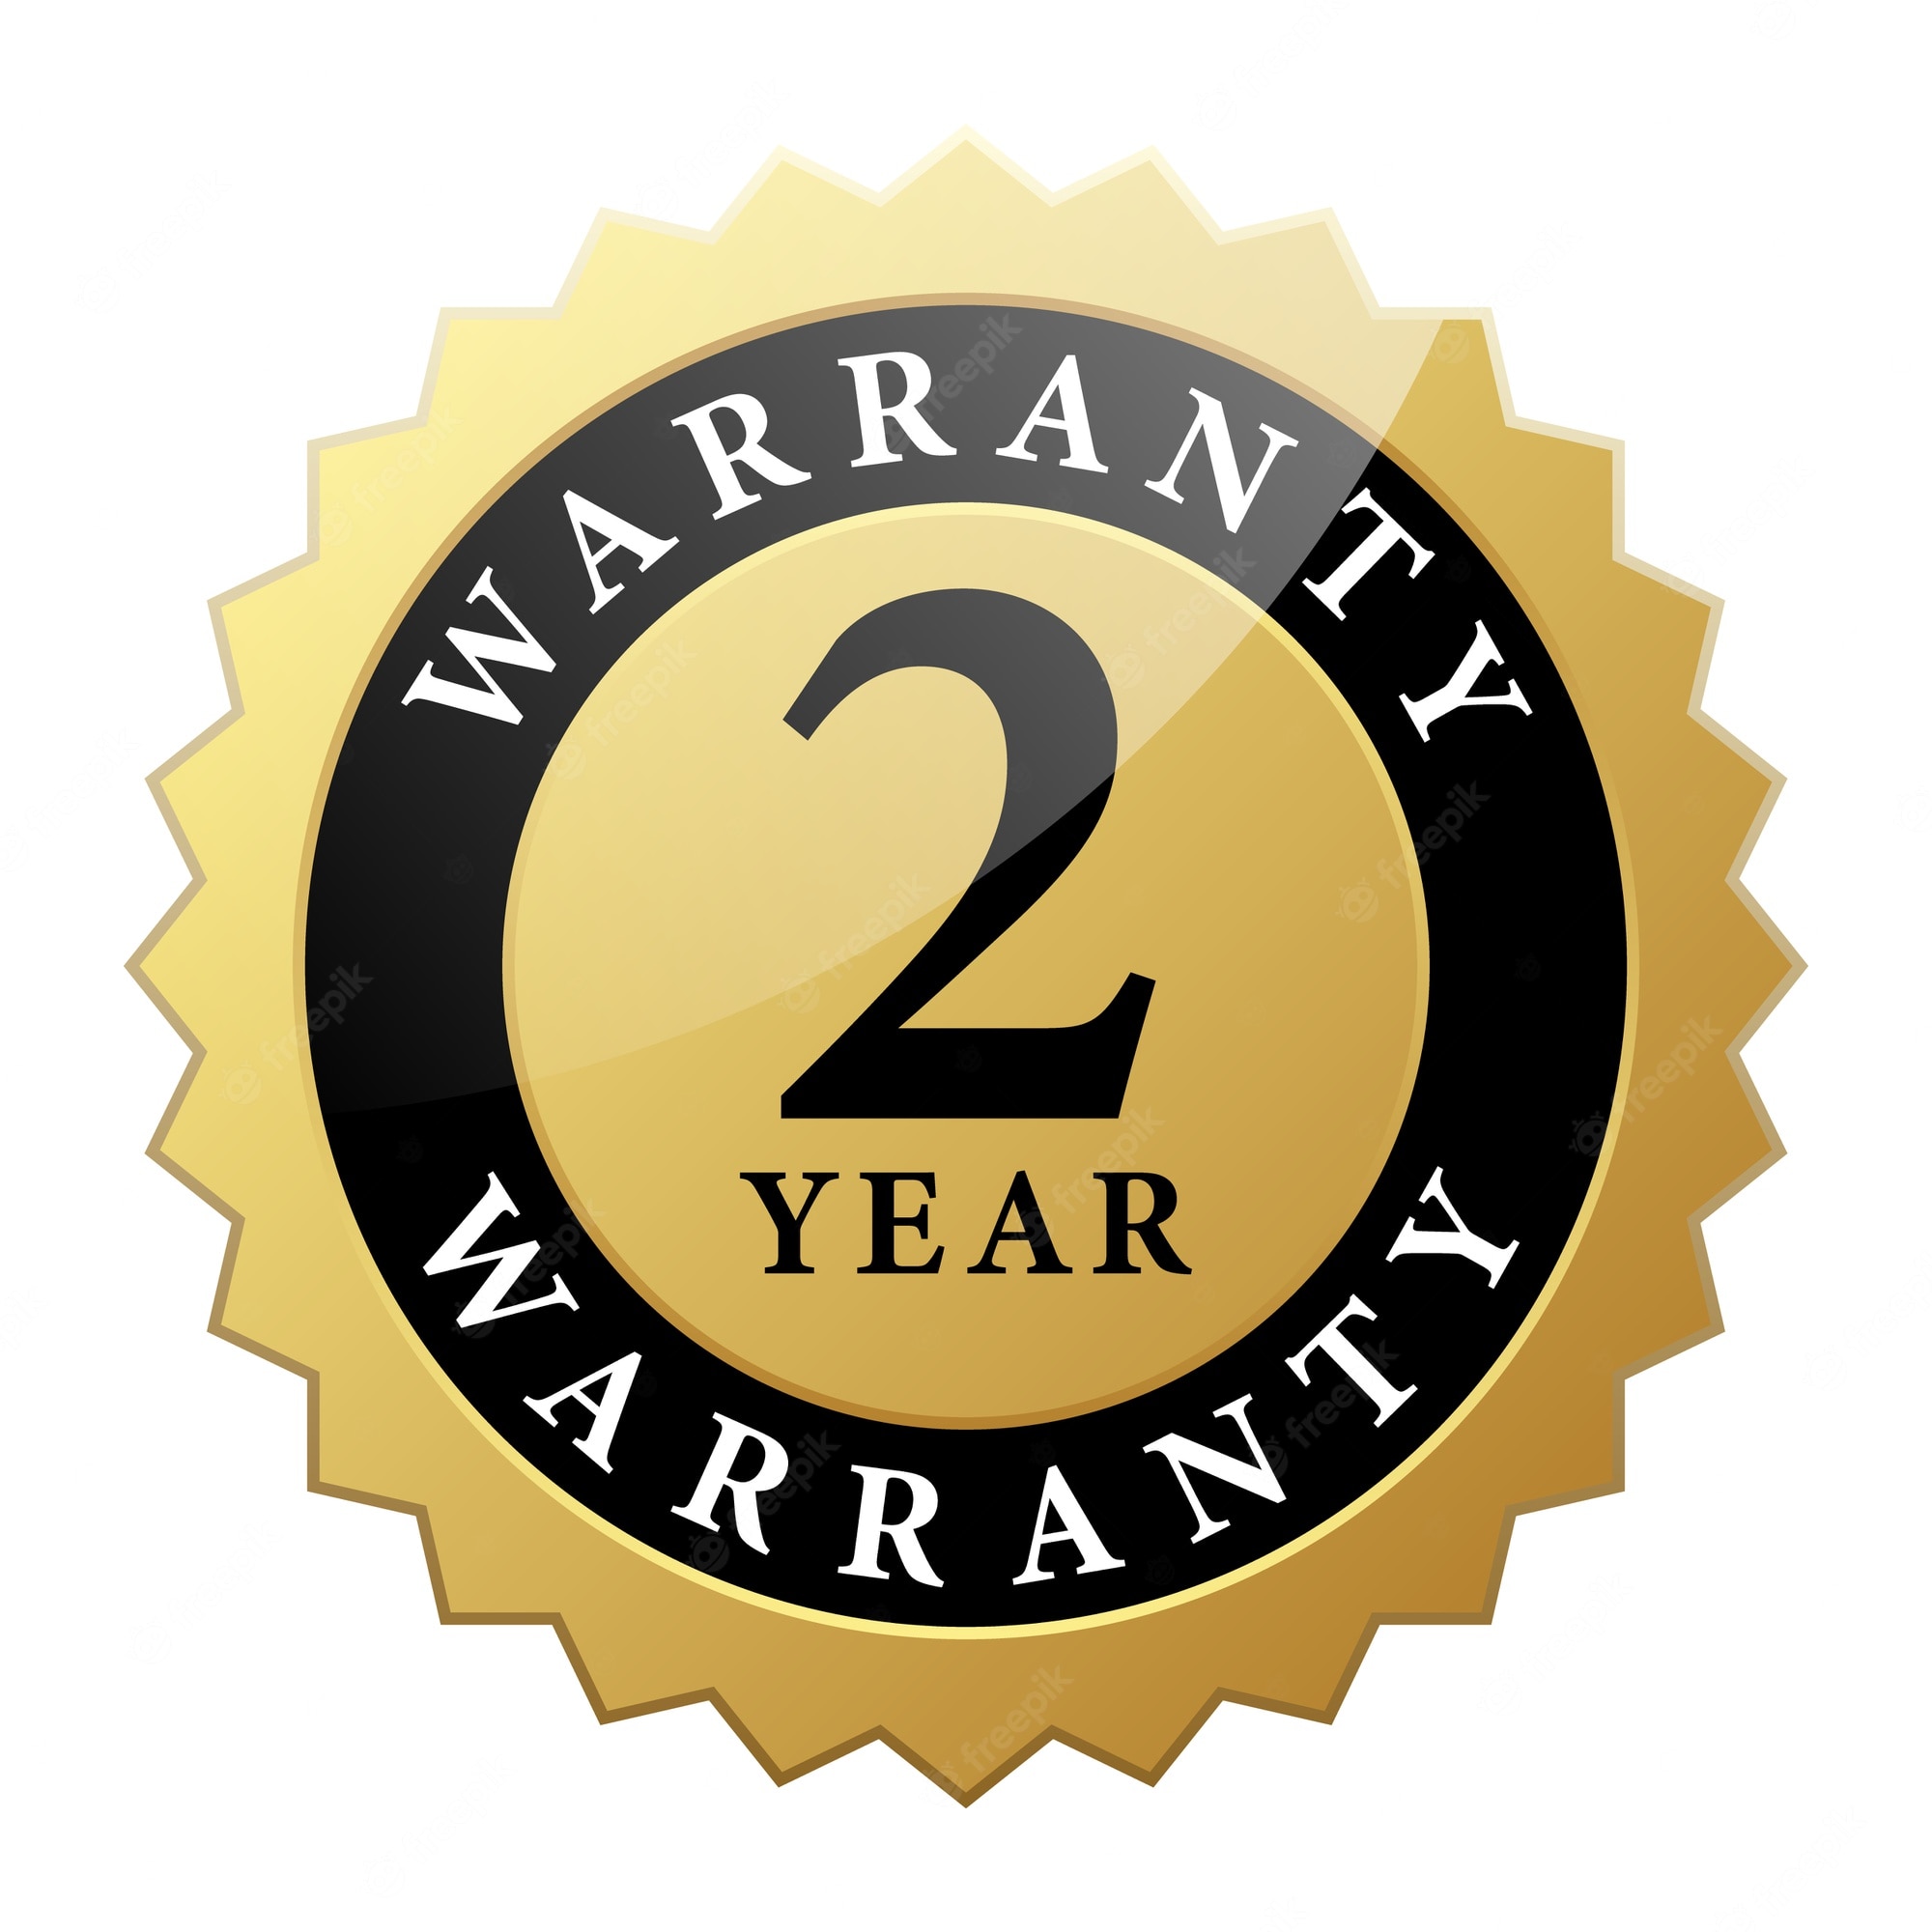 2 Year Extended Warranty 50